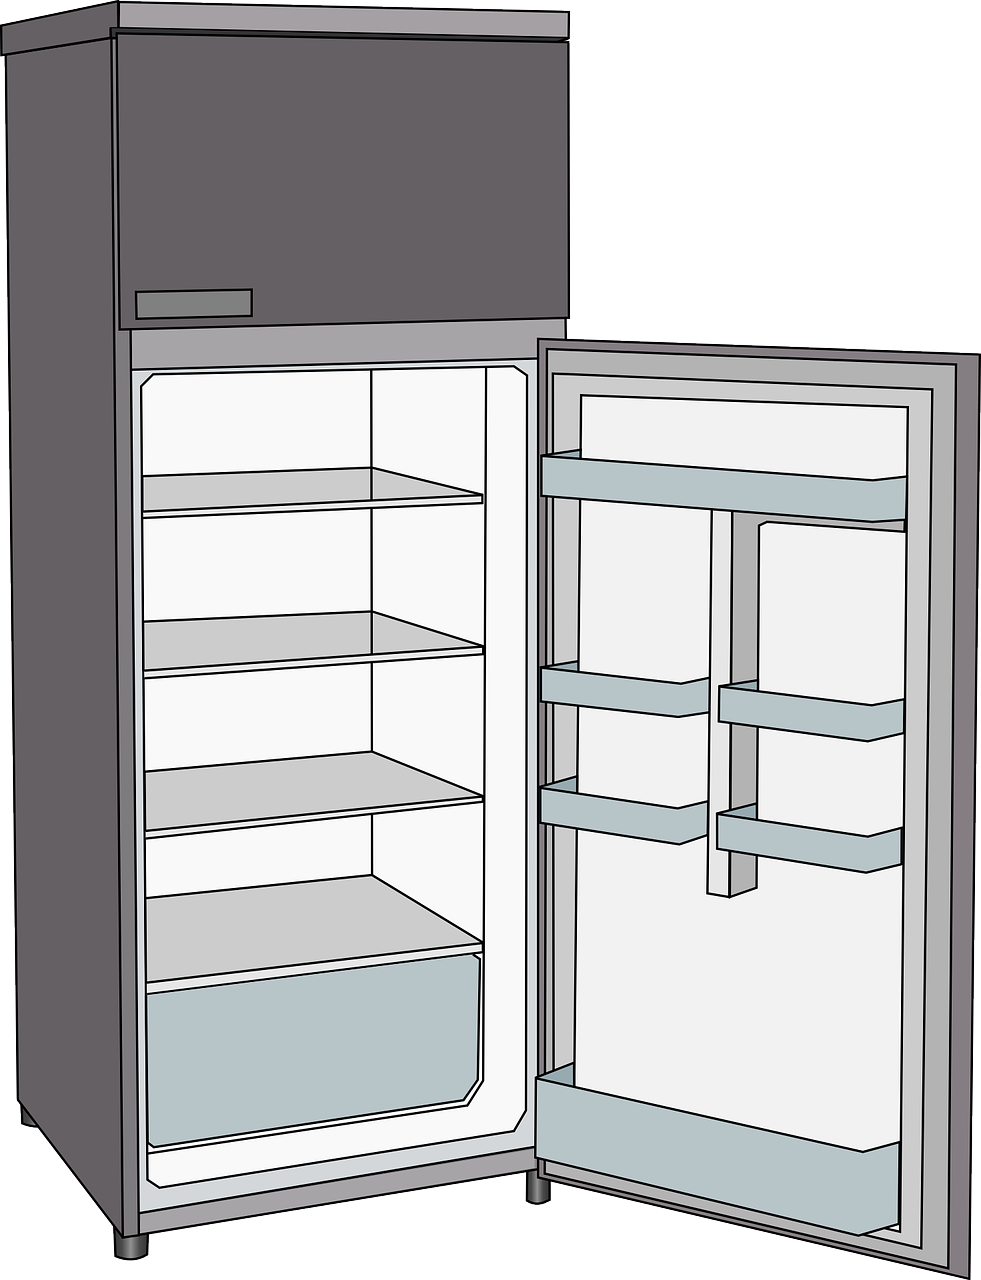 refrigerator, fridge, cooling-158634.jpg